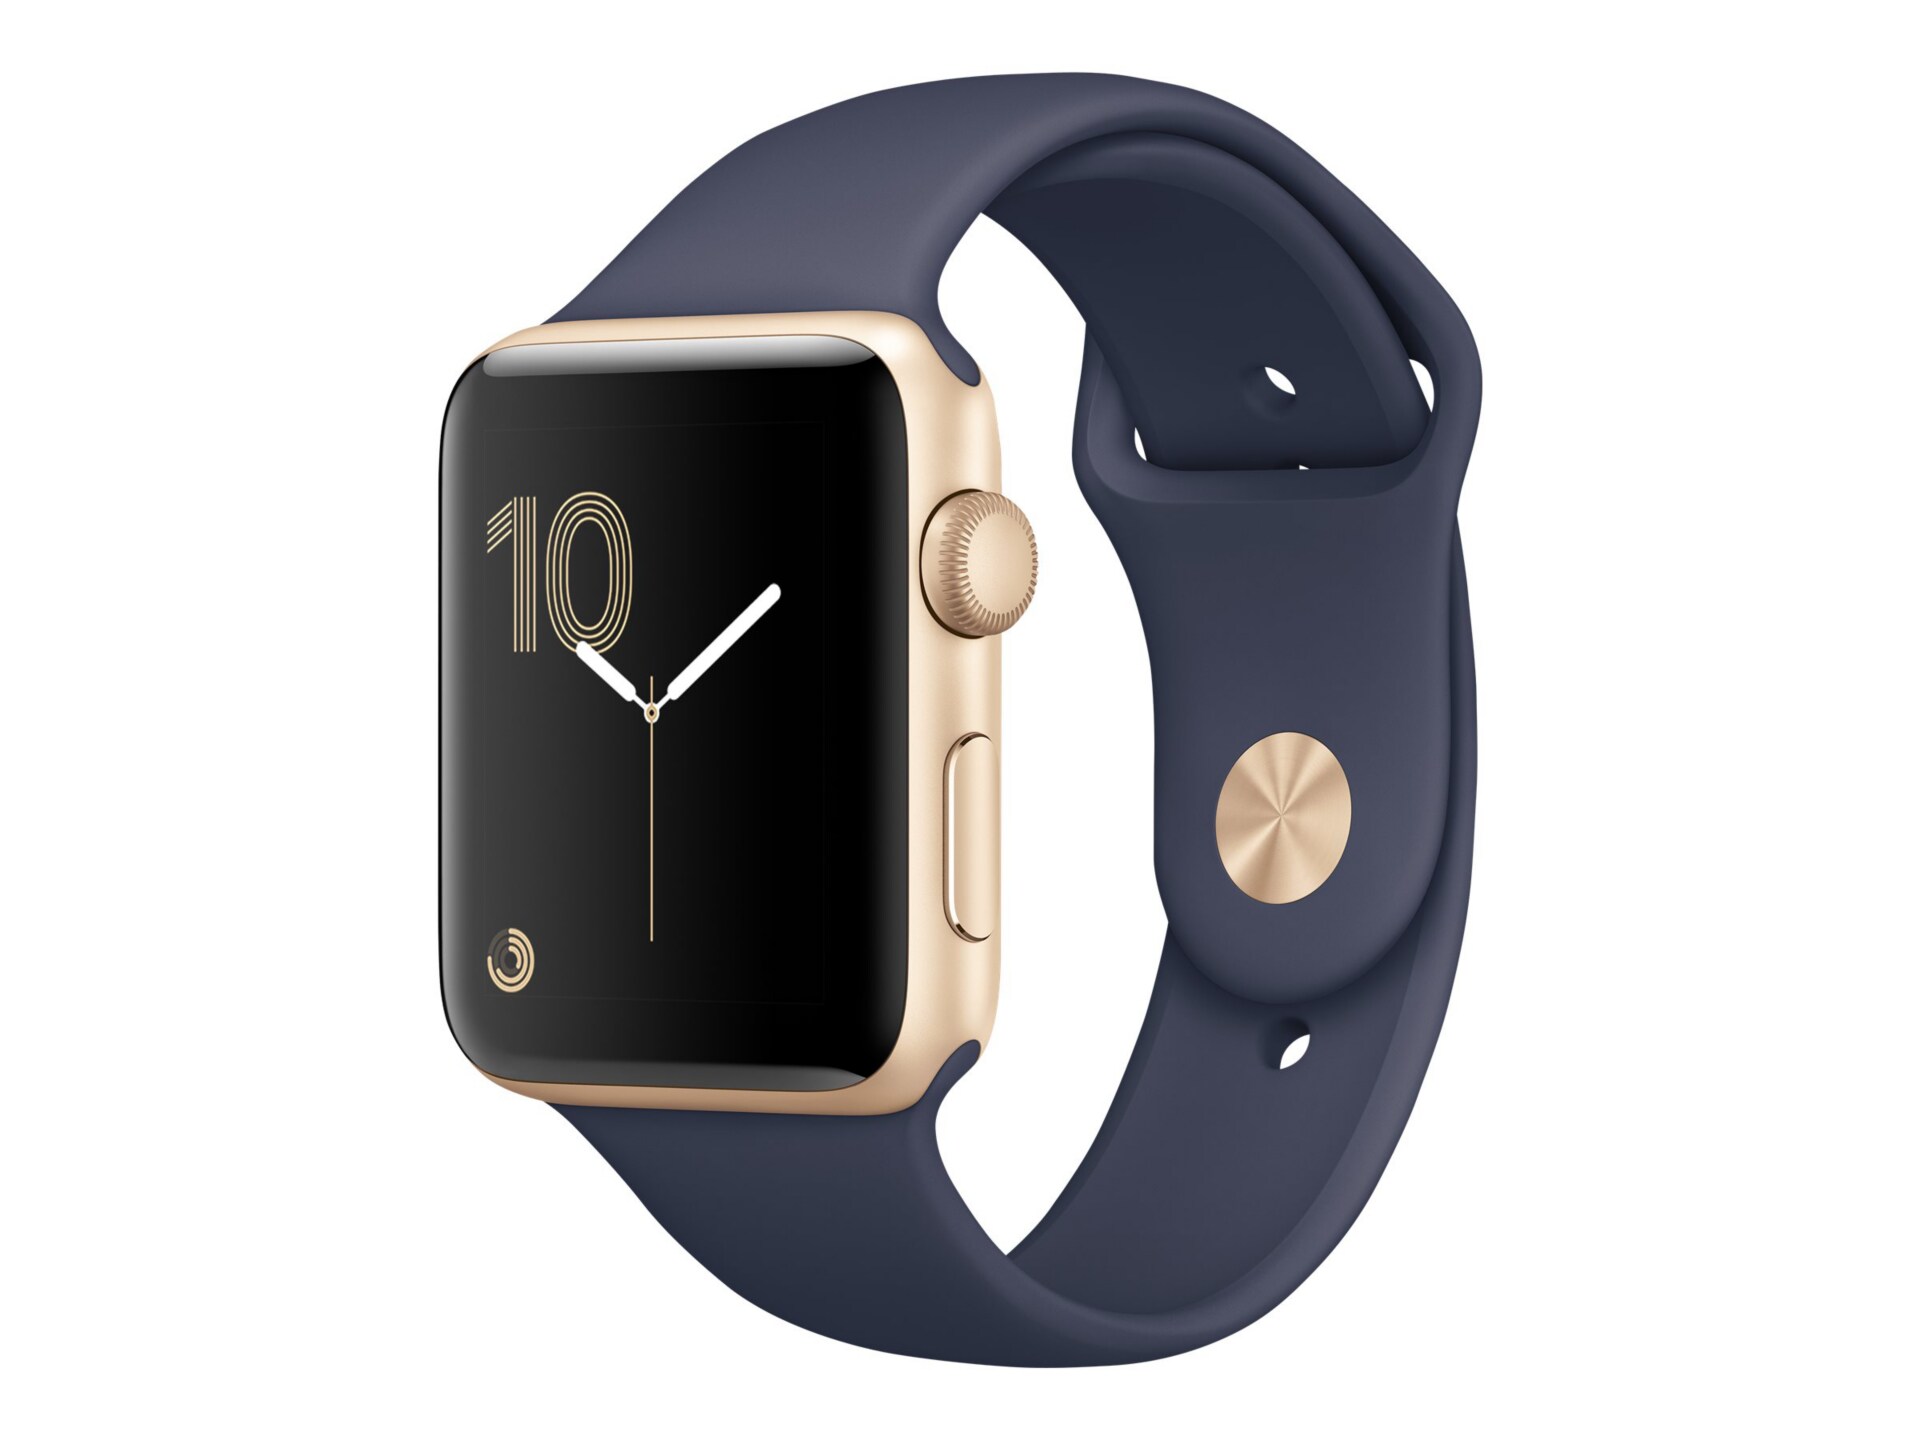 Apple Watch Series 2 - gold aluminum - smart watch with sport band midnight blue